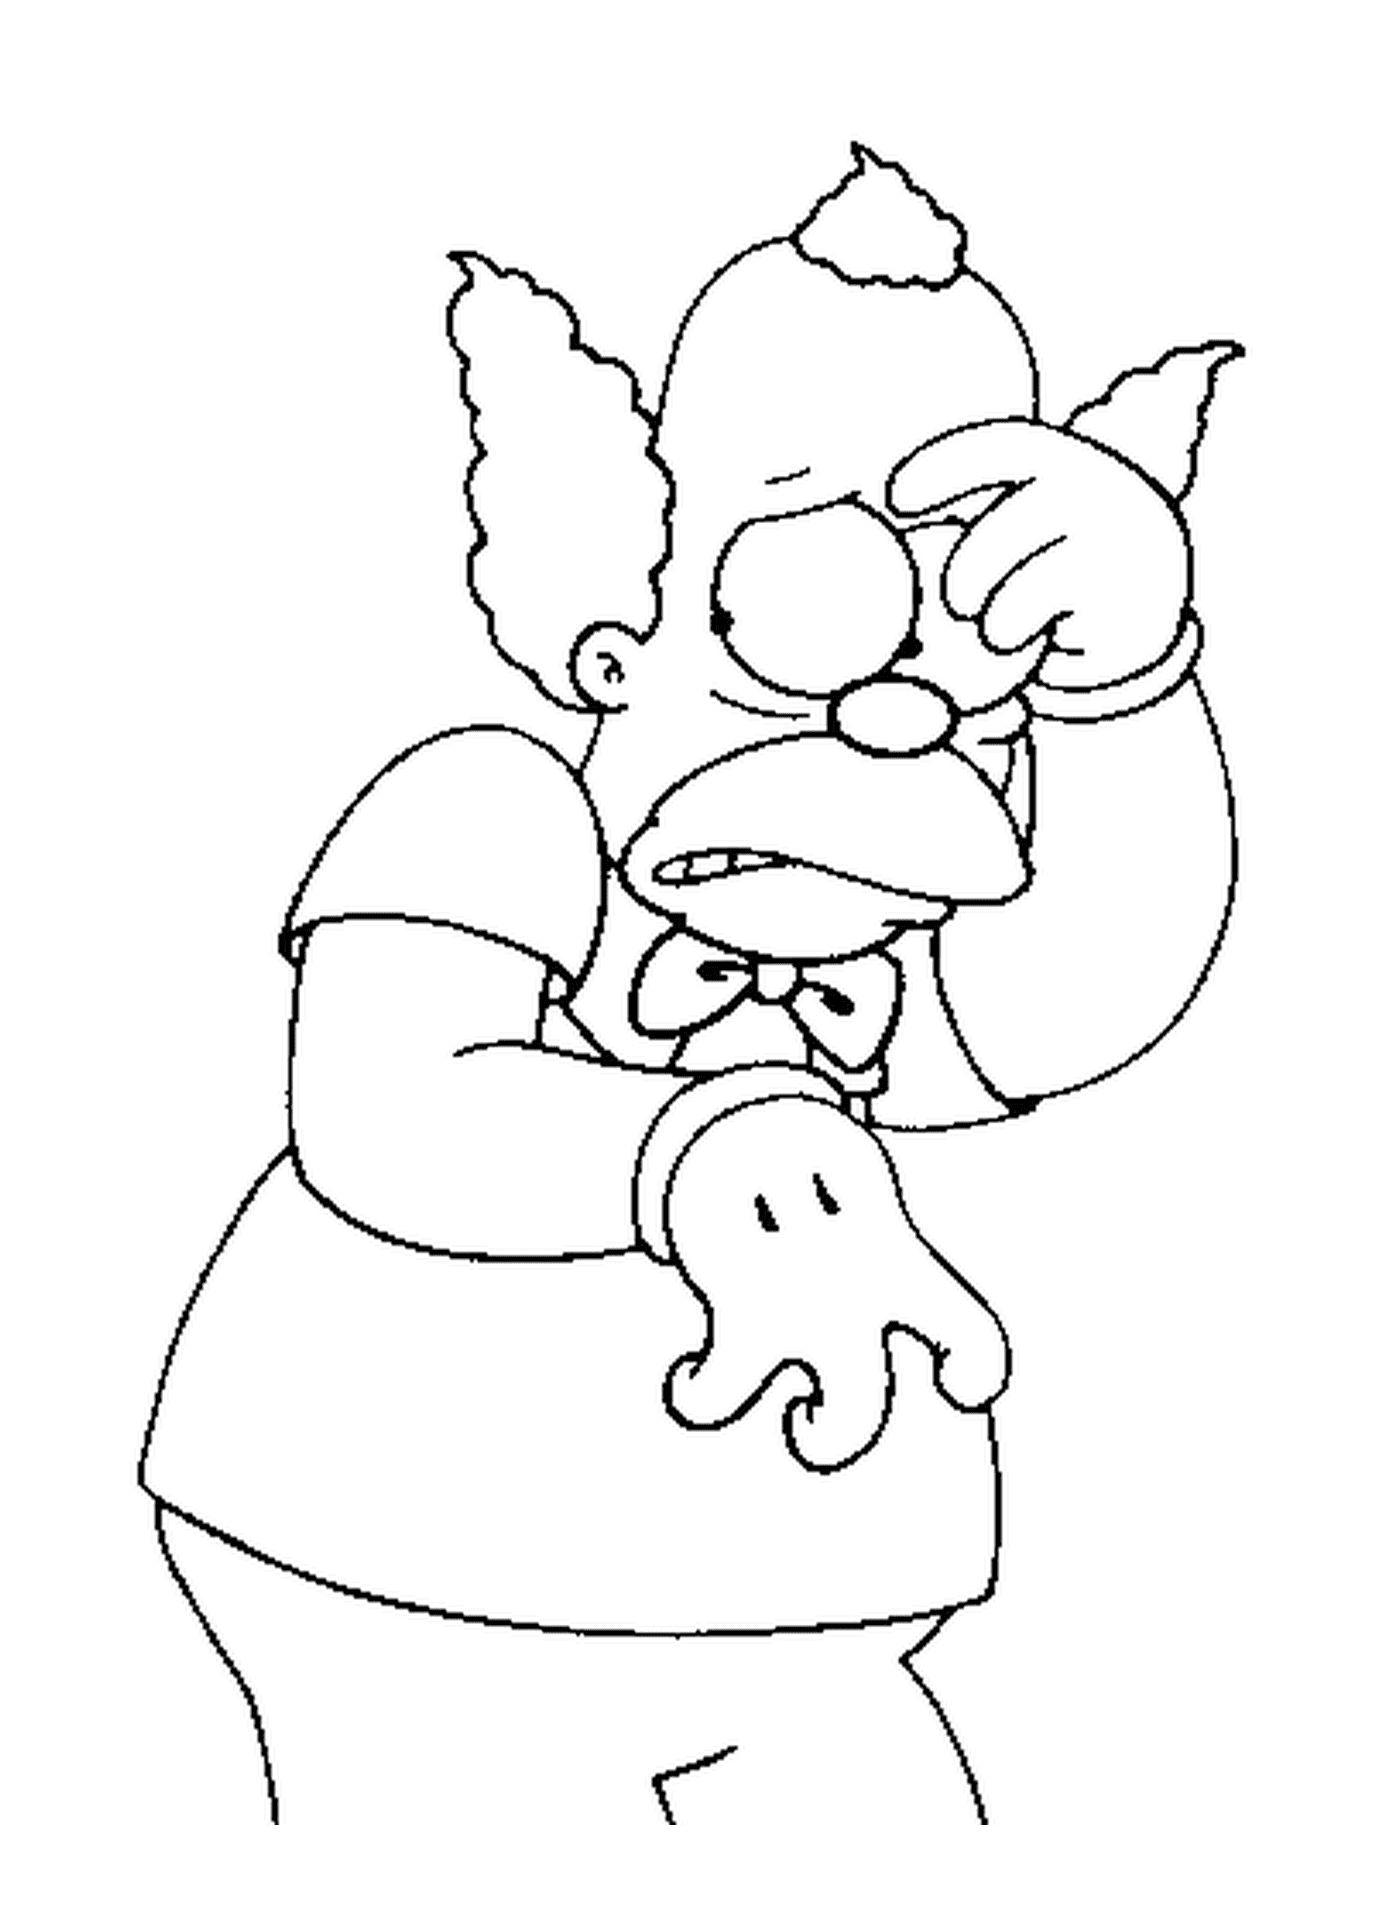 coloriage dessin simpson Krusty a peur